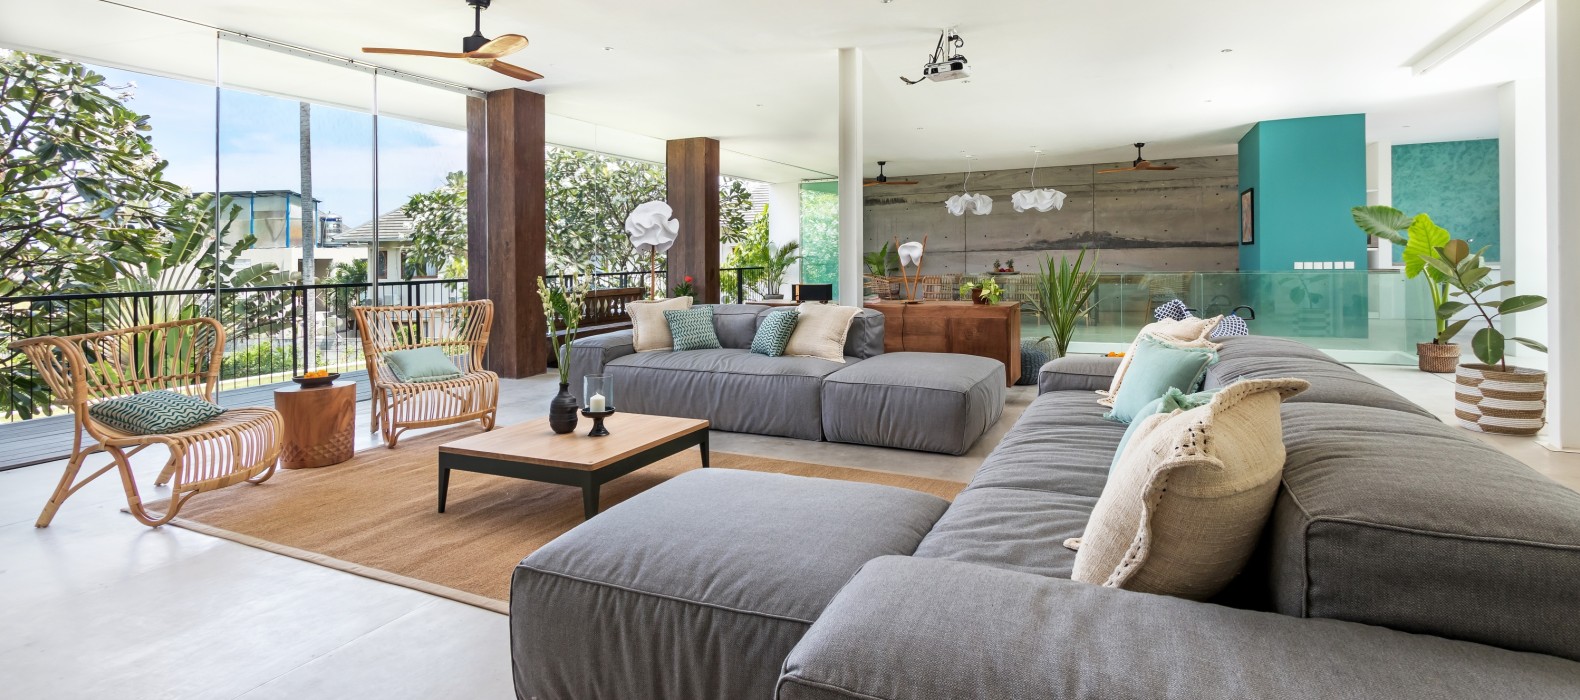 Living room of Villa Nuria in Bali